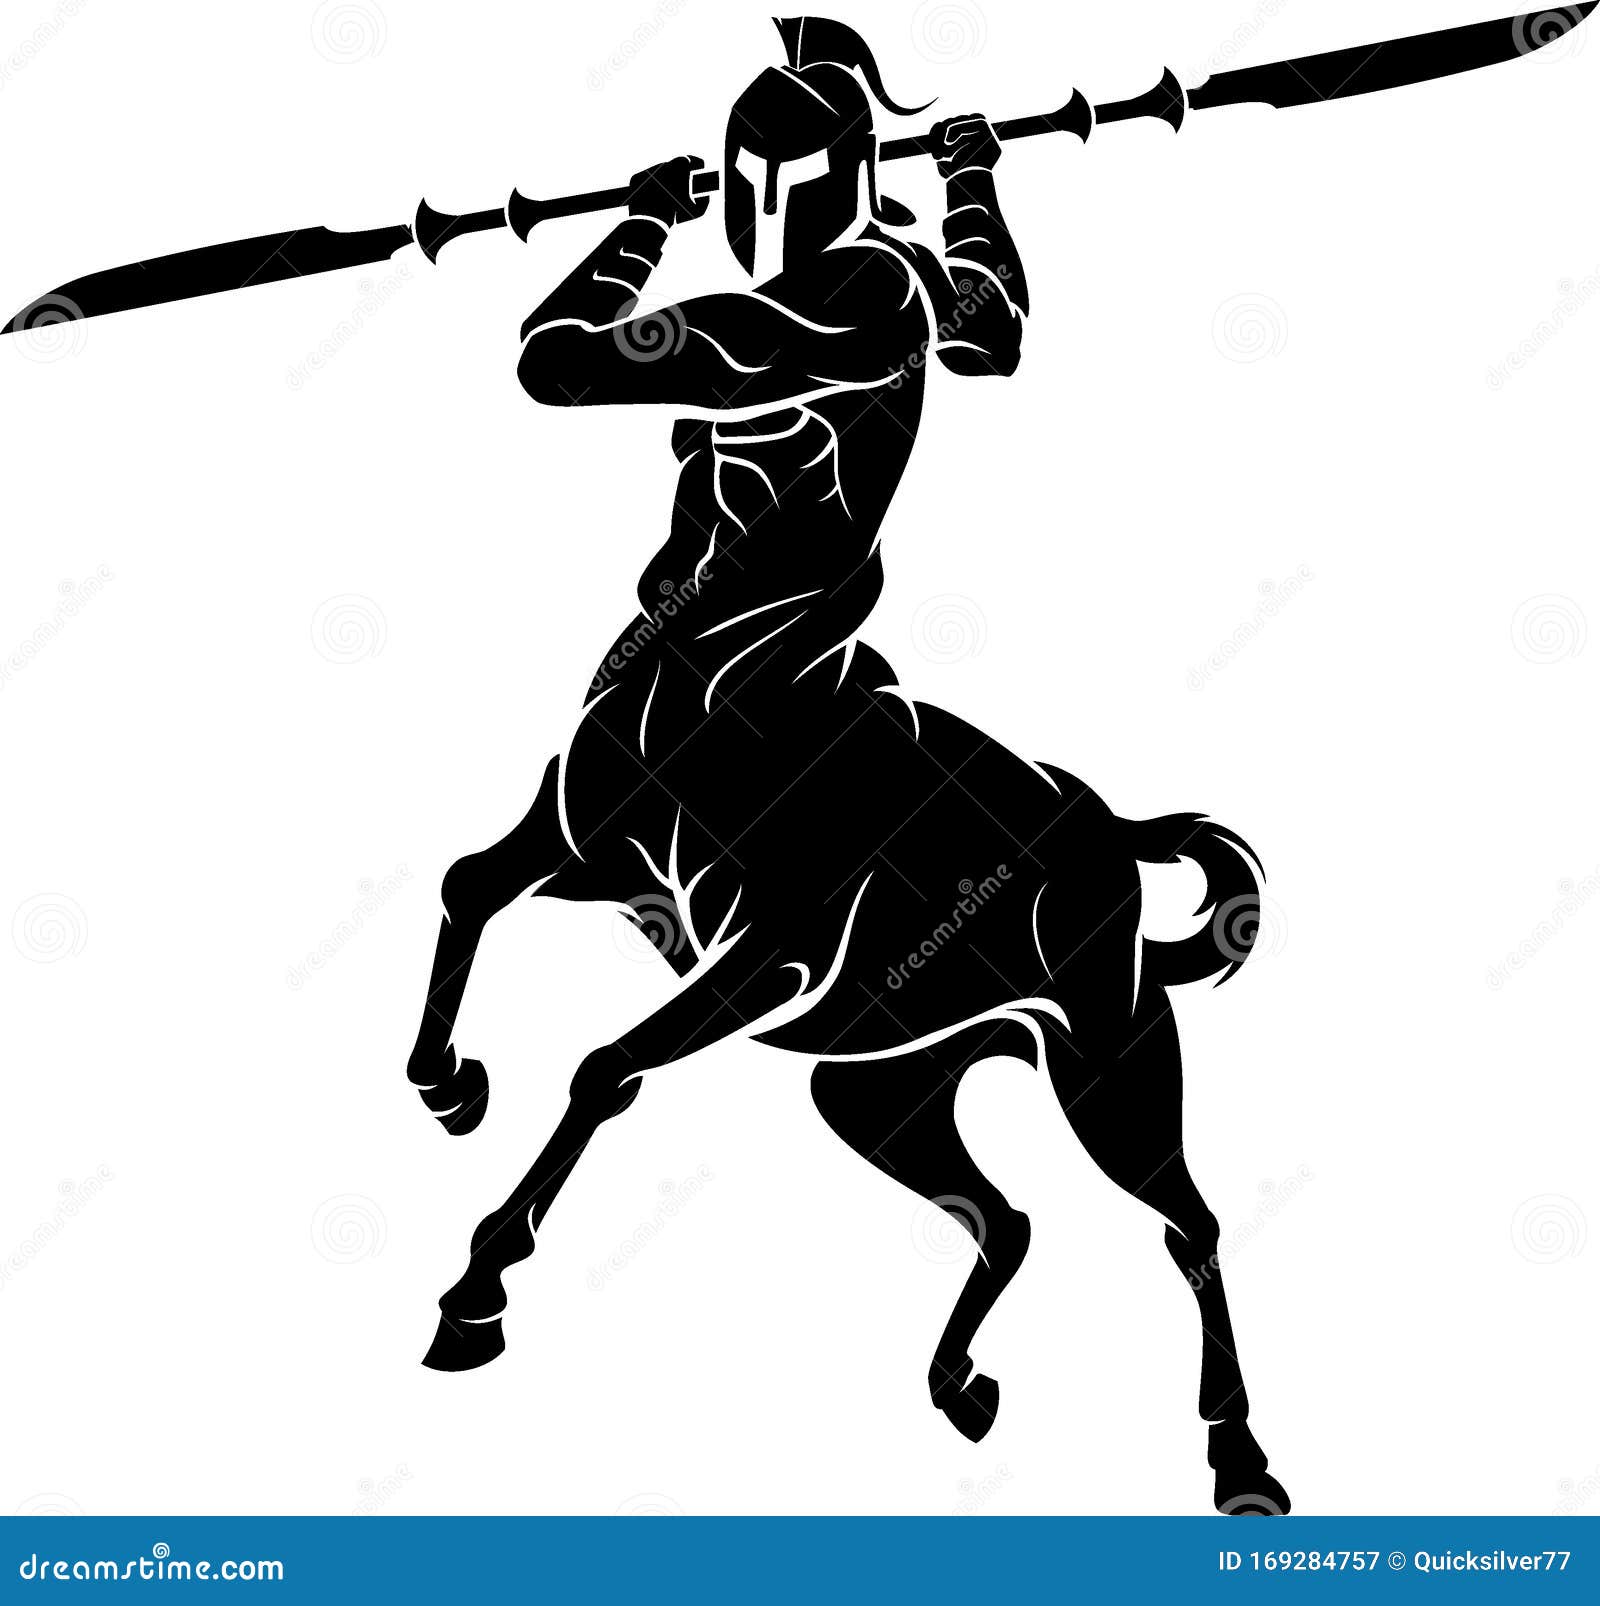 centaur double spear blade silhouette